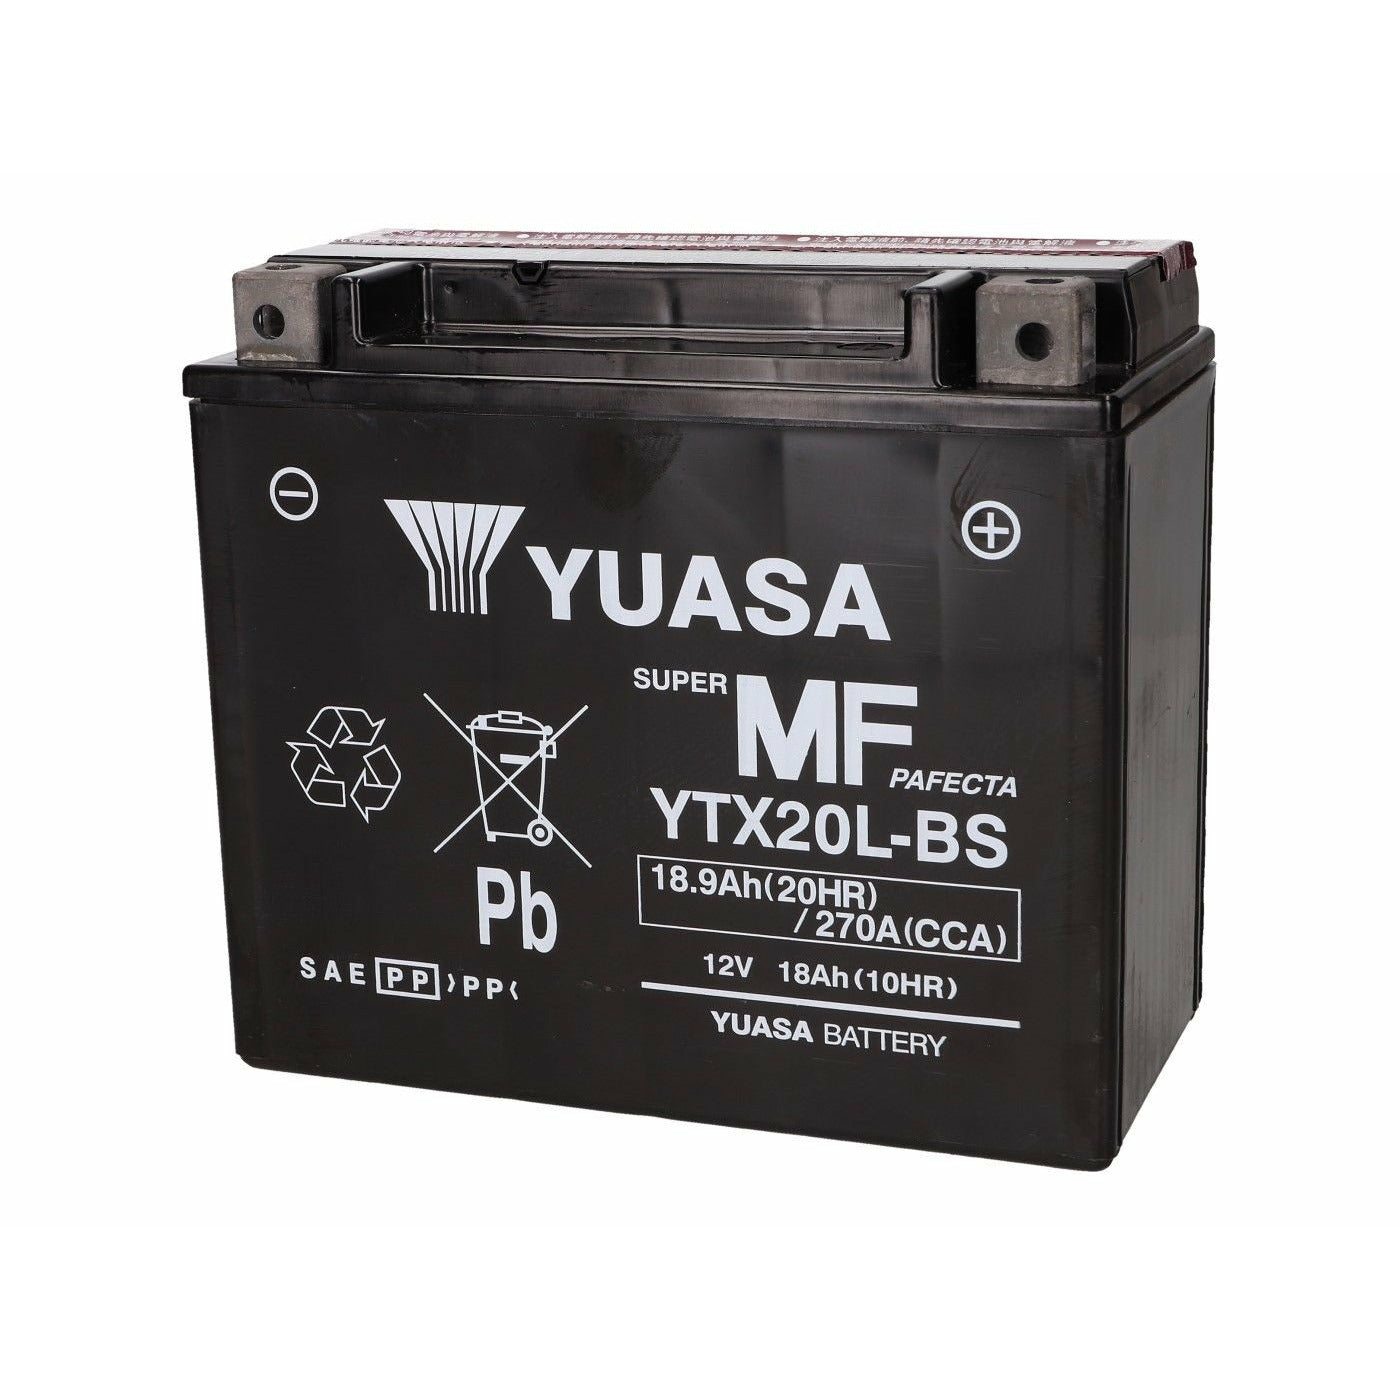 YUASA YTX20L-BS CO: 31951